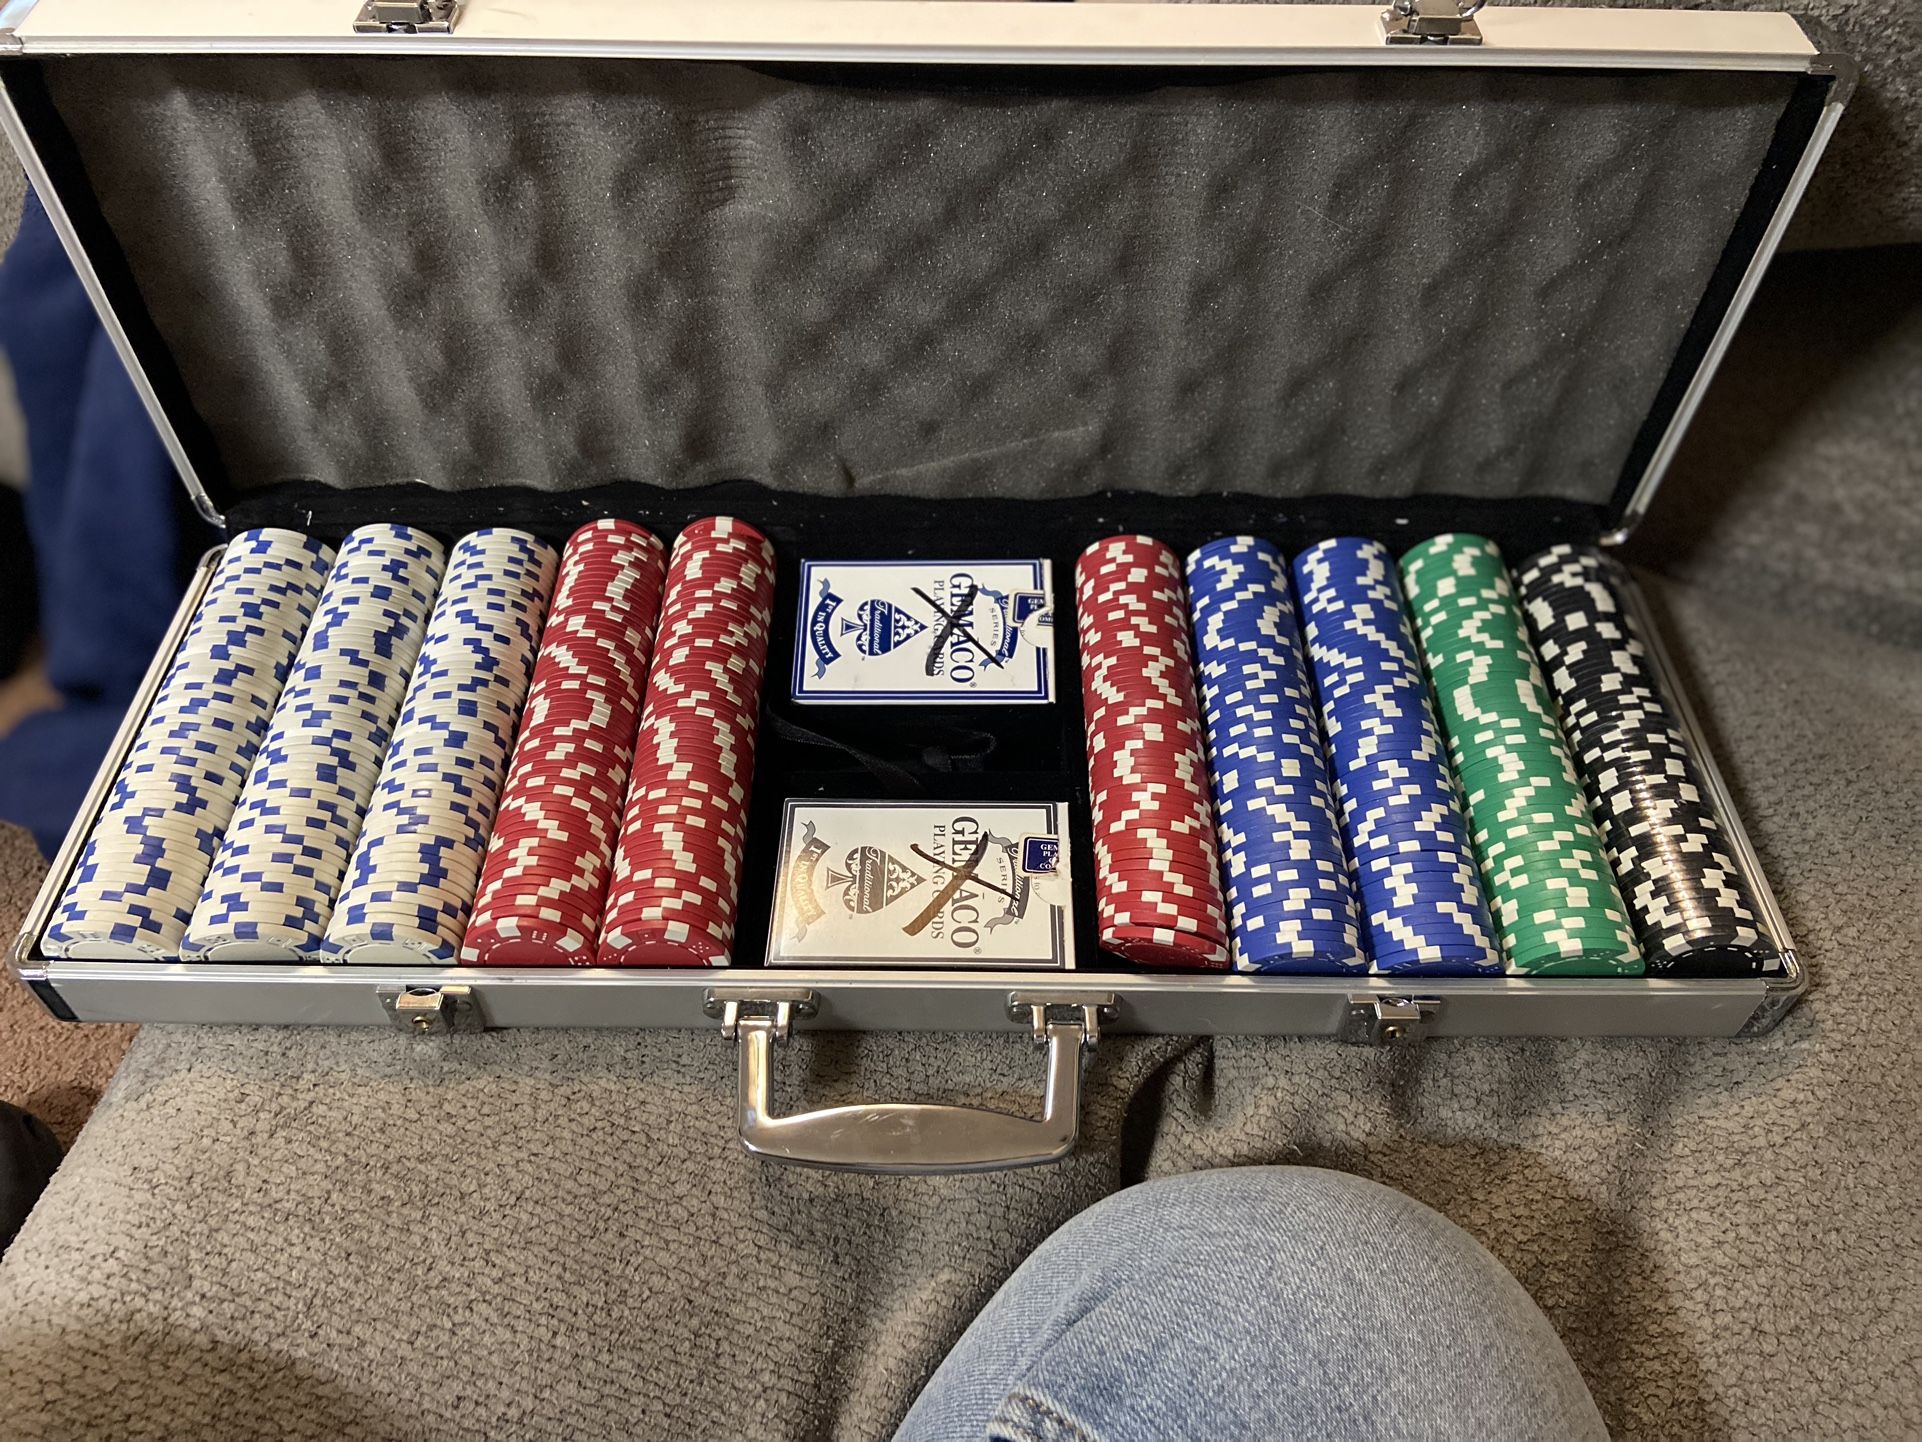 Poker Set